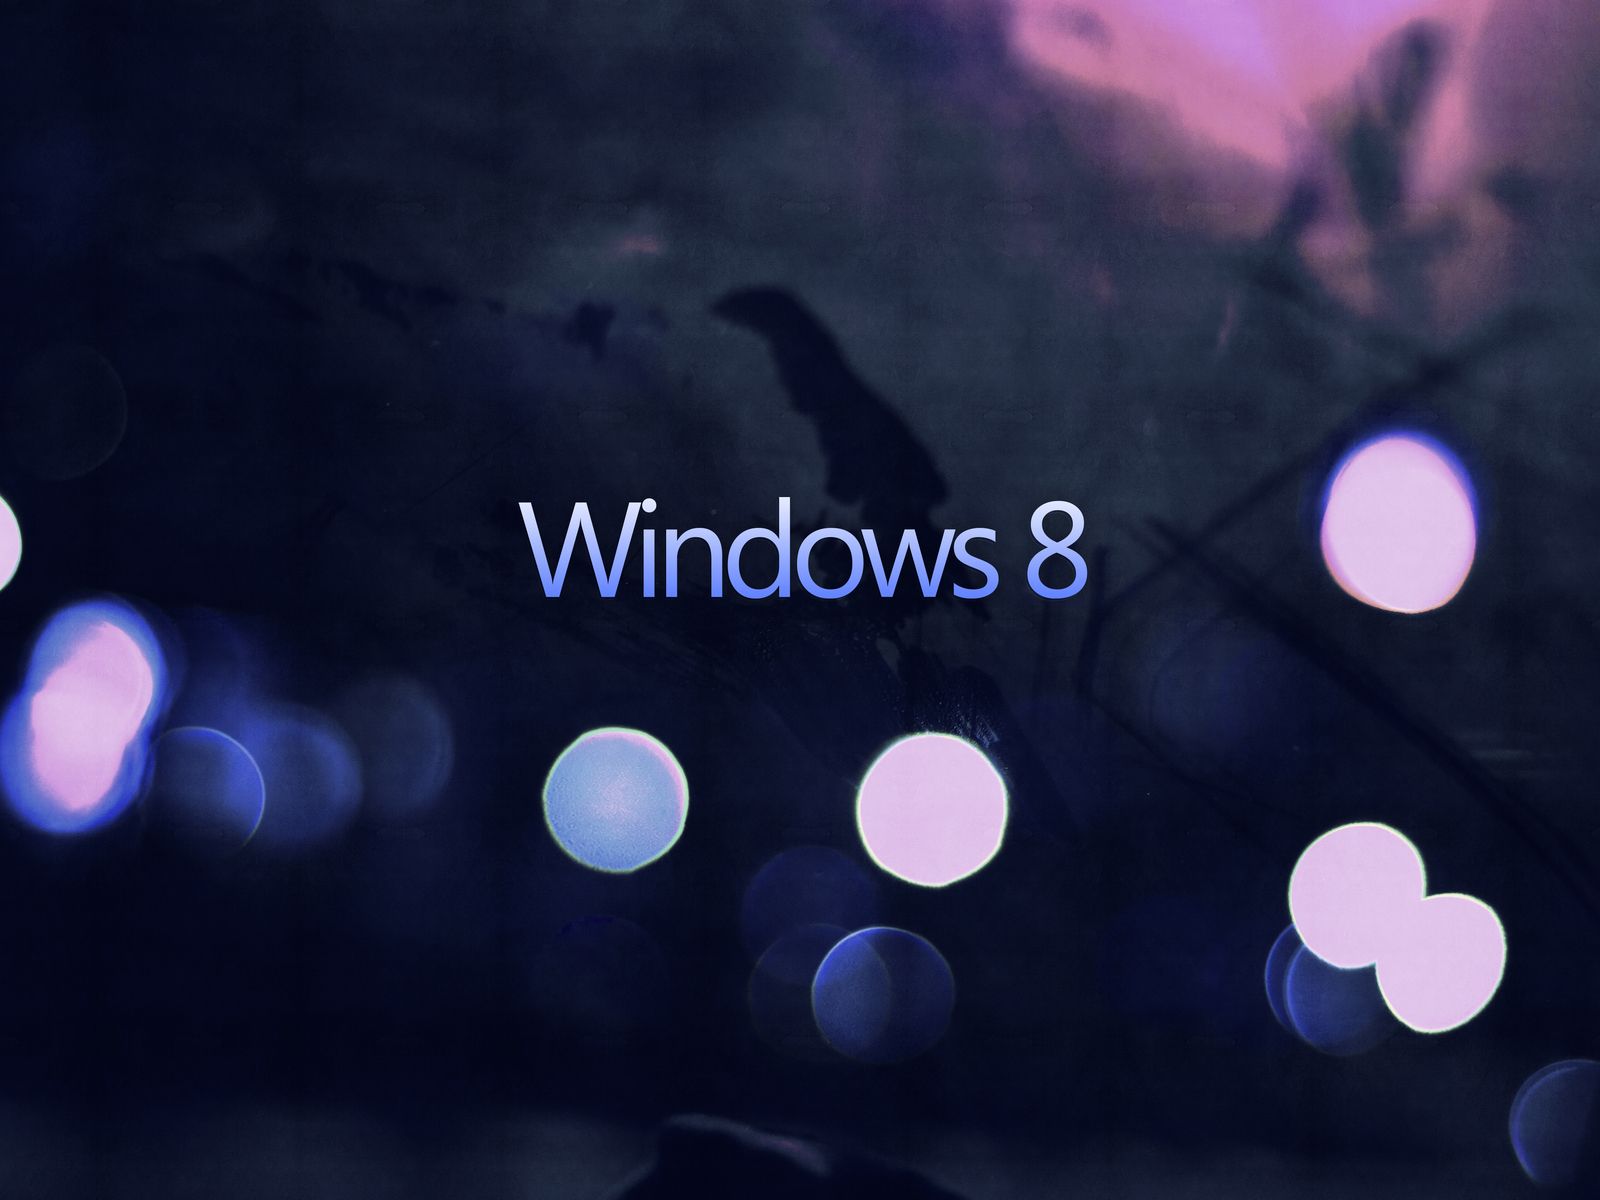 Windows 8. HD WallpaperHD Wallpaper. Windows wallpaper, Dark windows, Windows 8